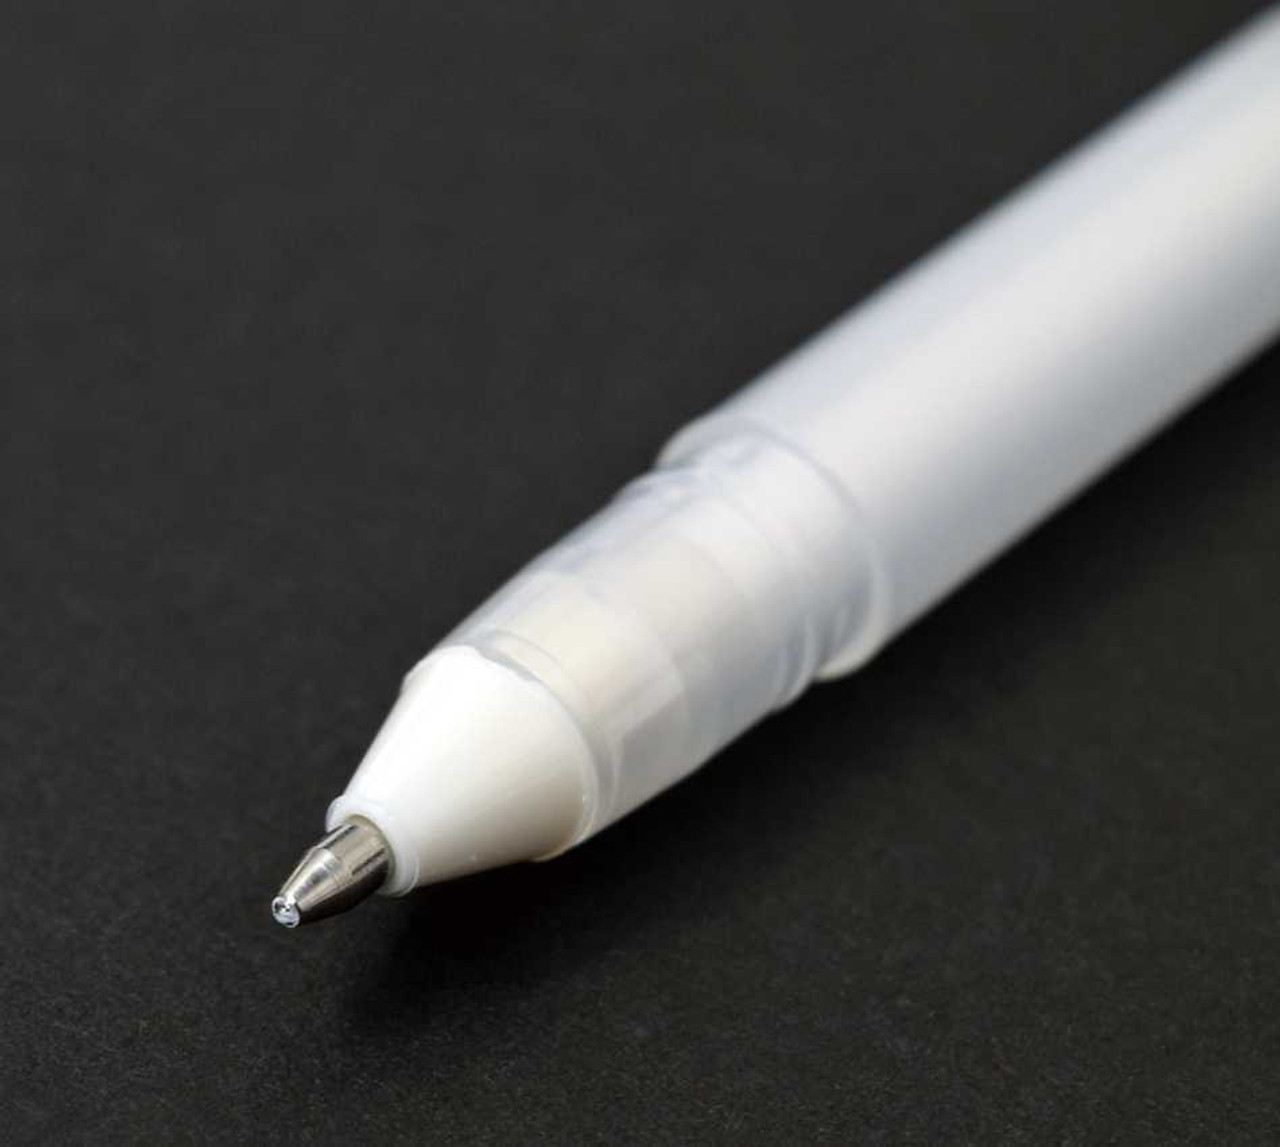 Sakura Gelly Roll Classic White Gel Ink Pen, Fine Medium Bold